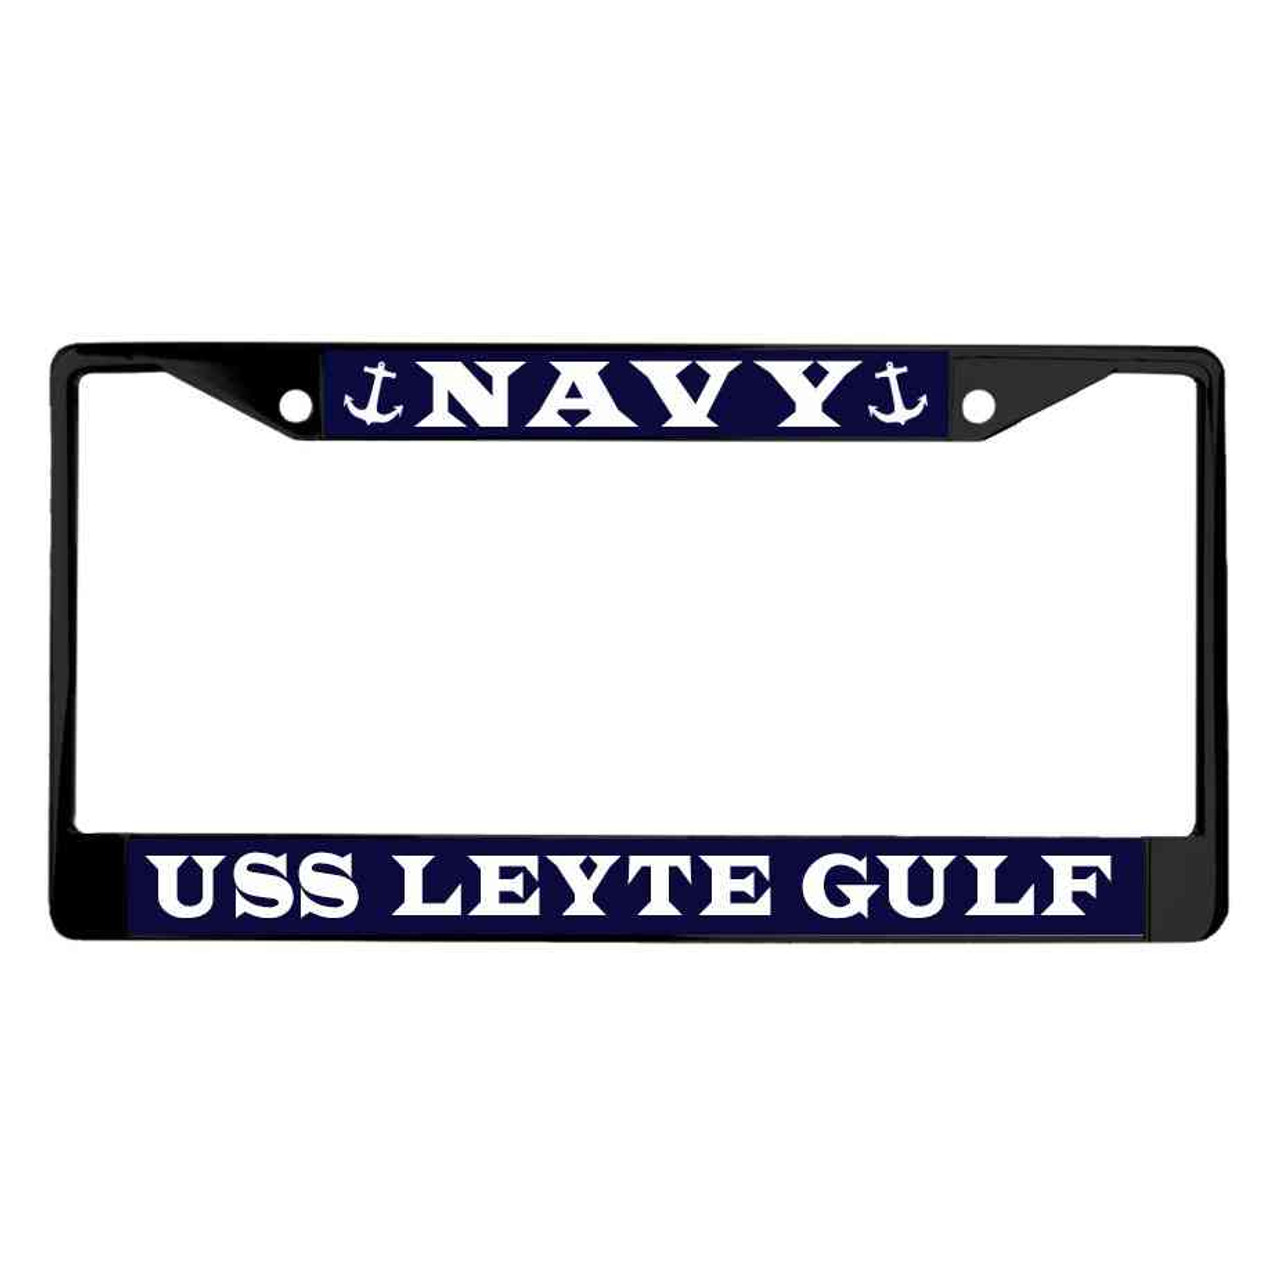 uss leyte gulf powder coated license plate frame